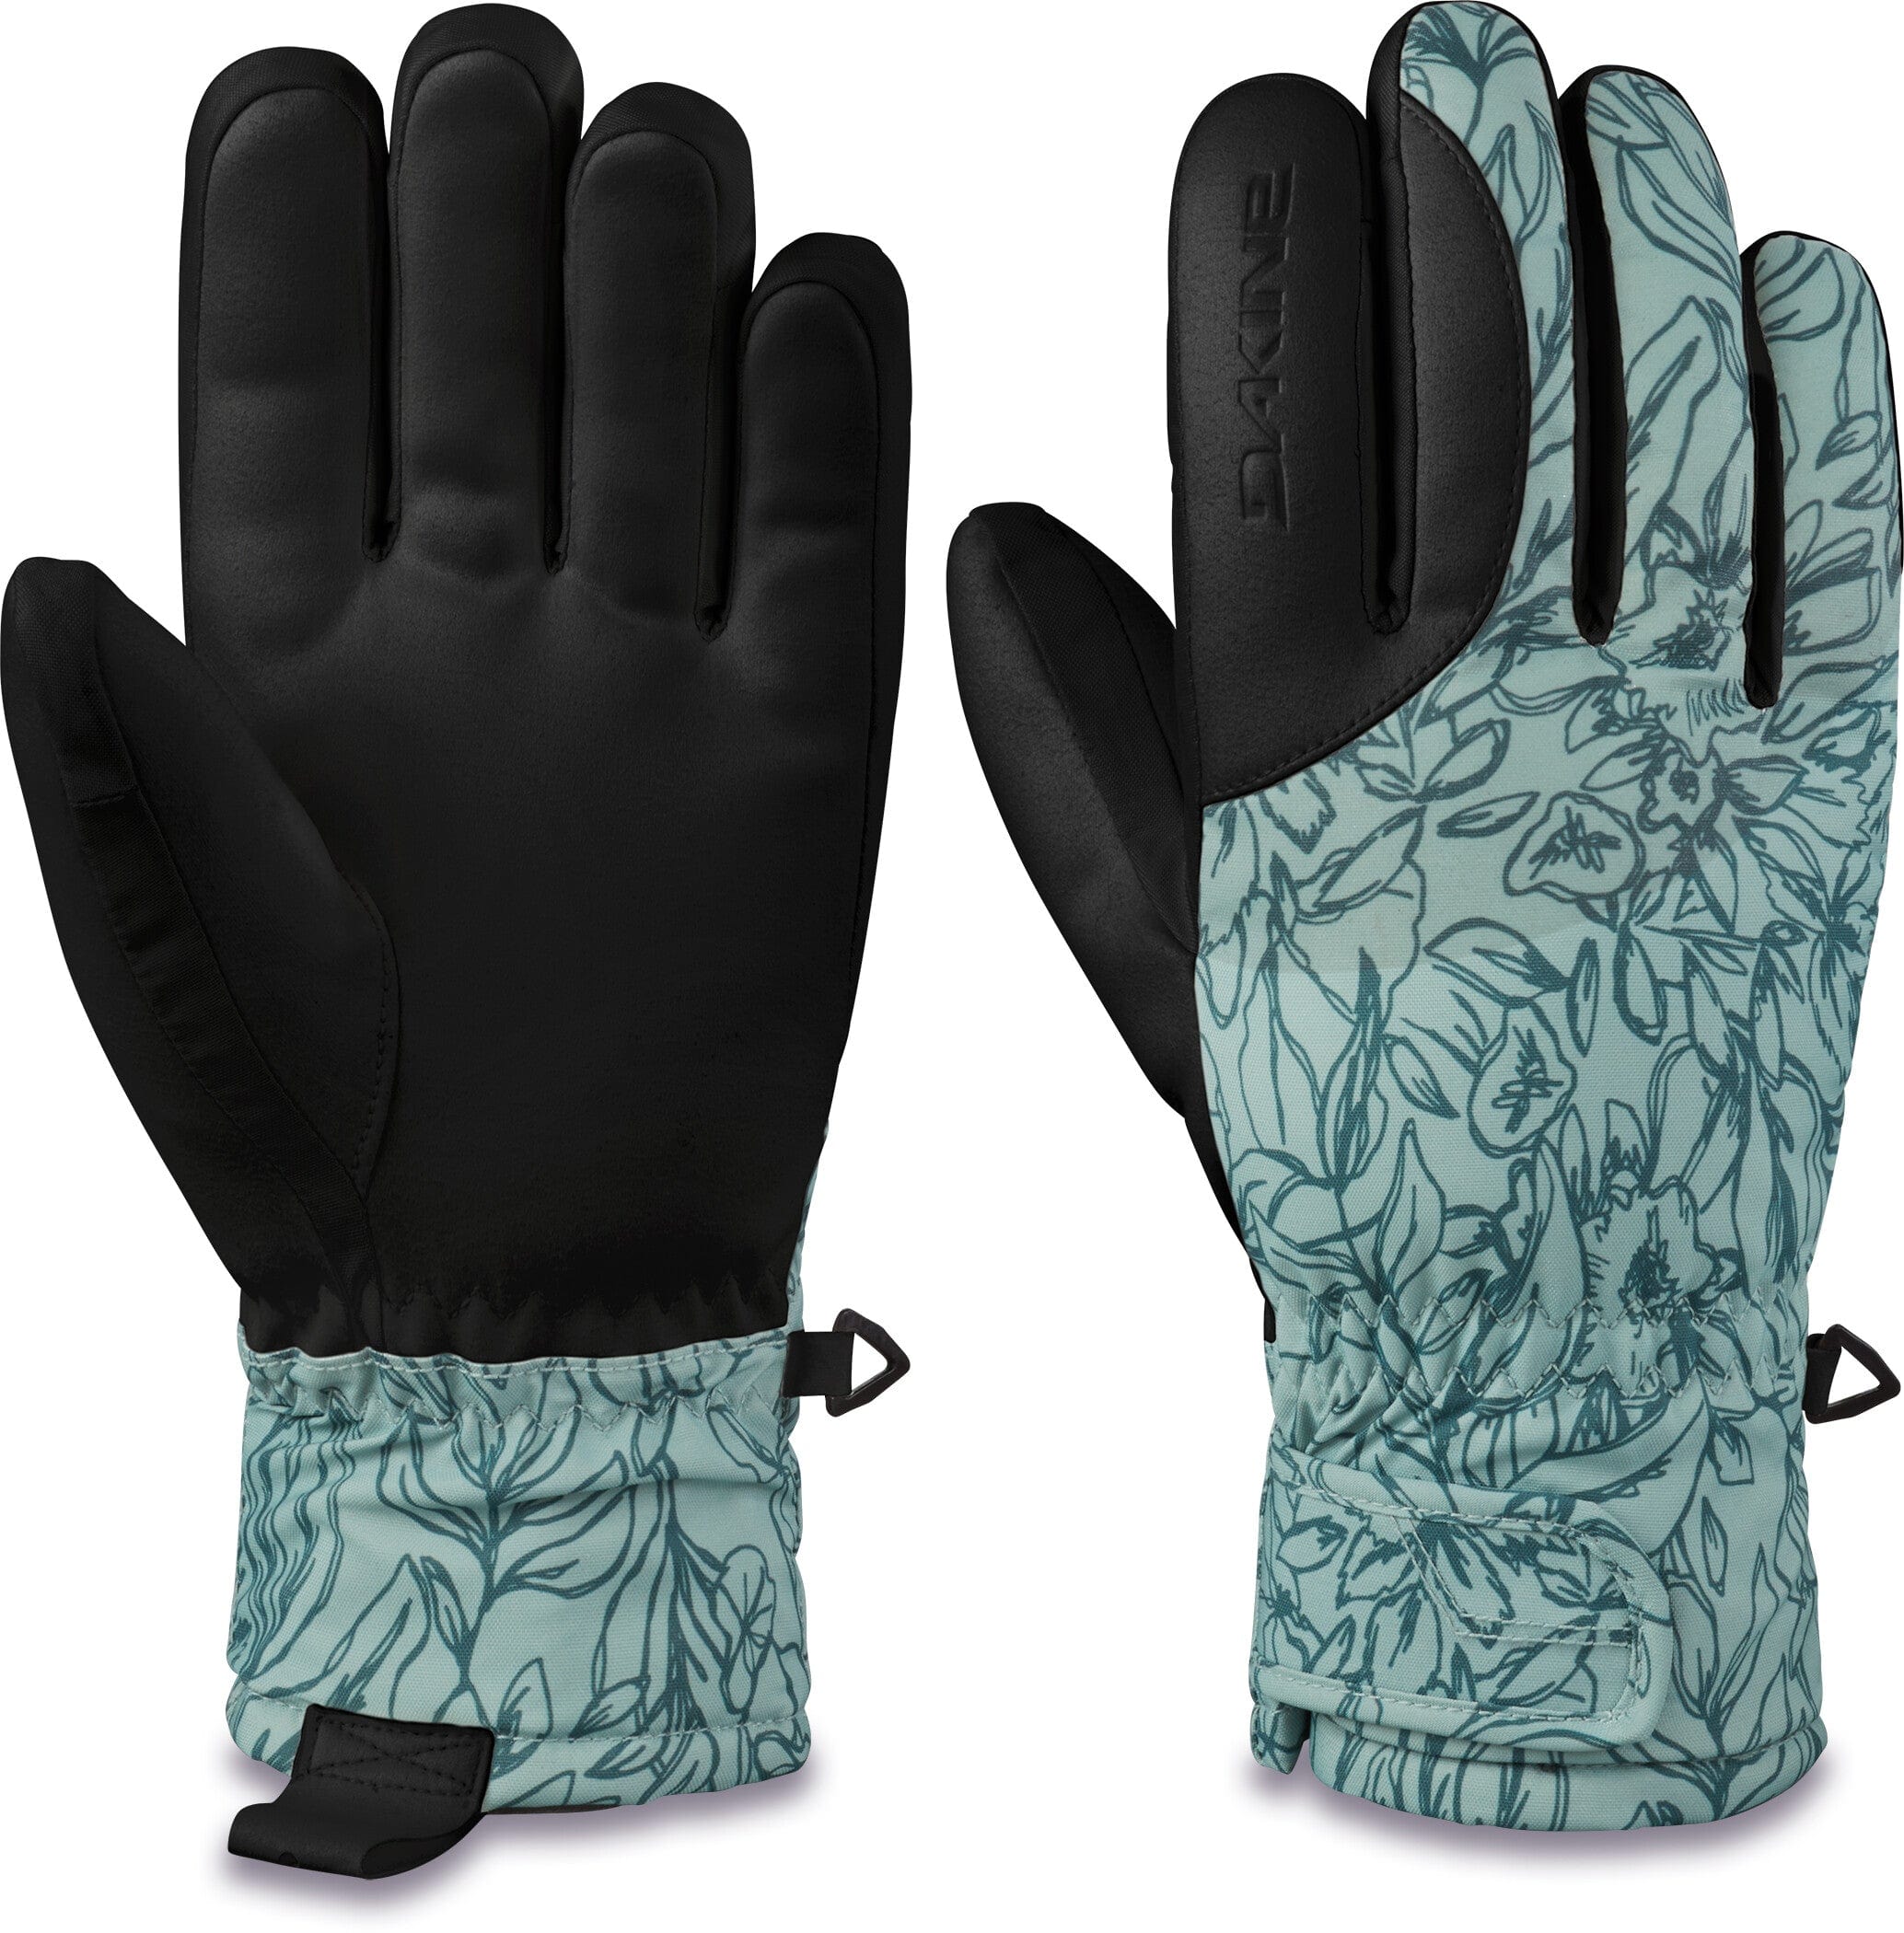 Dakine Tahoe Gloves